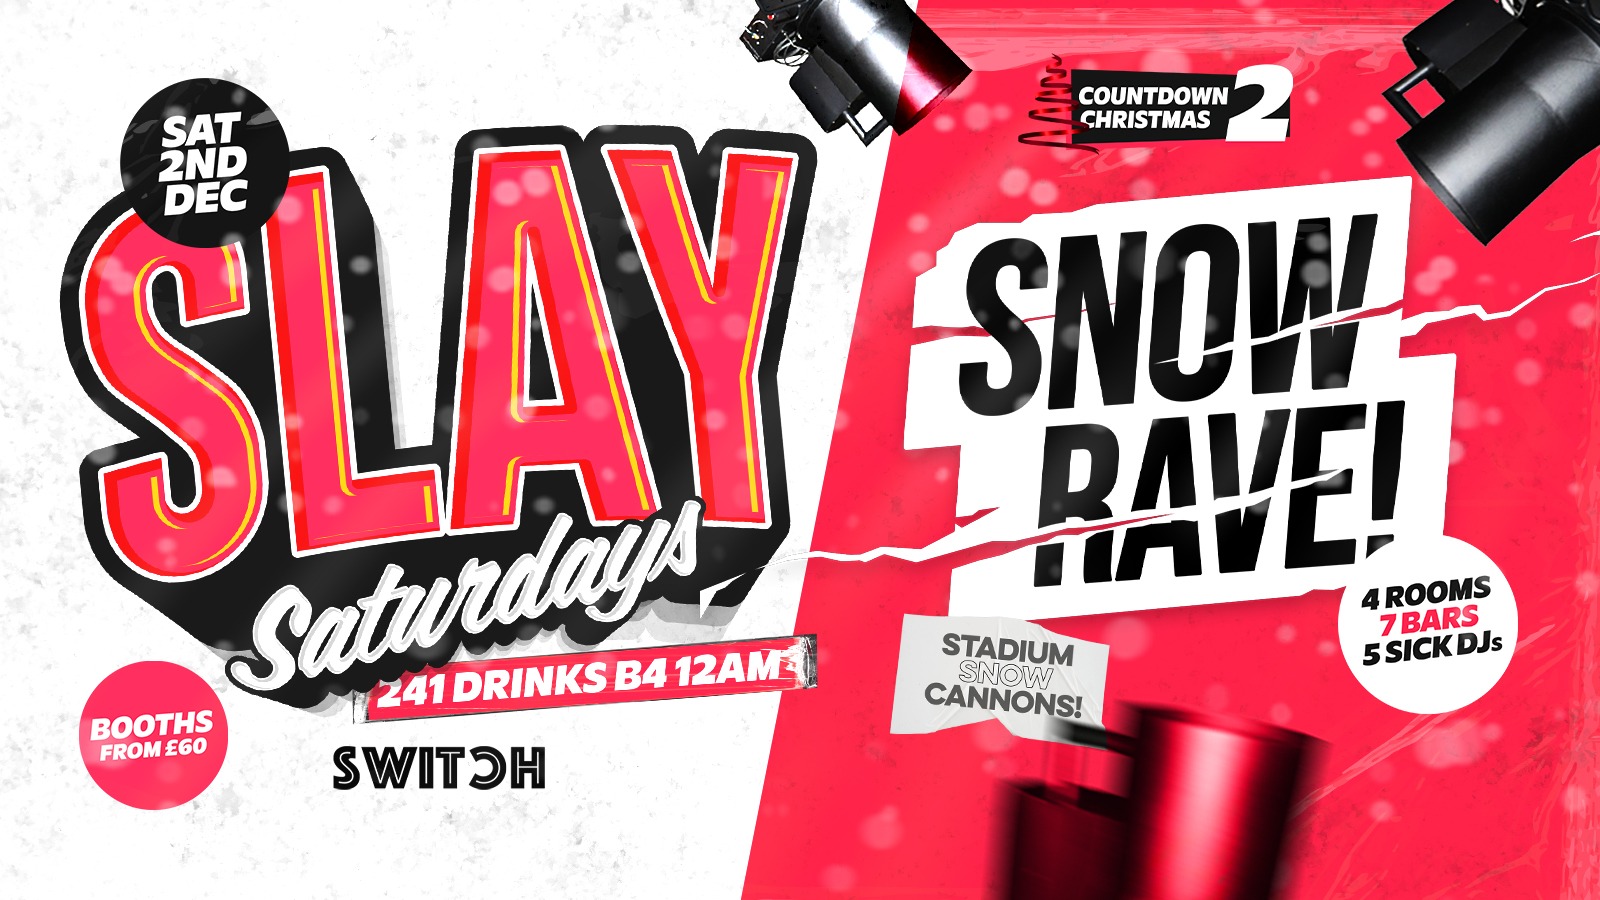 SLAY Saturdays | 2-4-1 Drinks B4 Midnight | Snow Rave